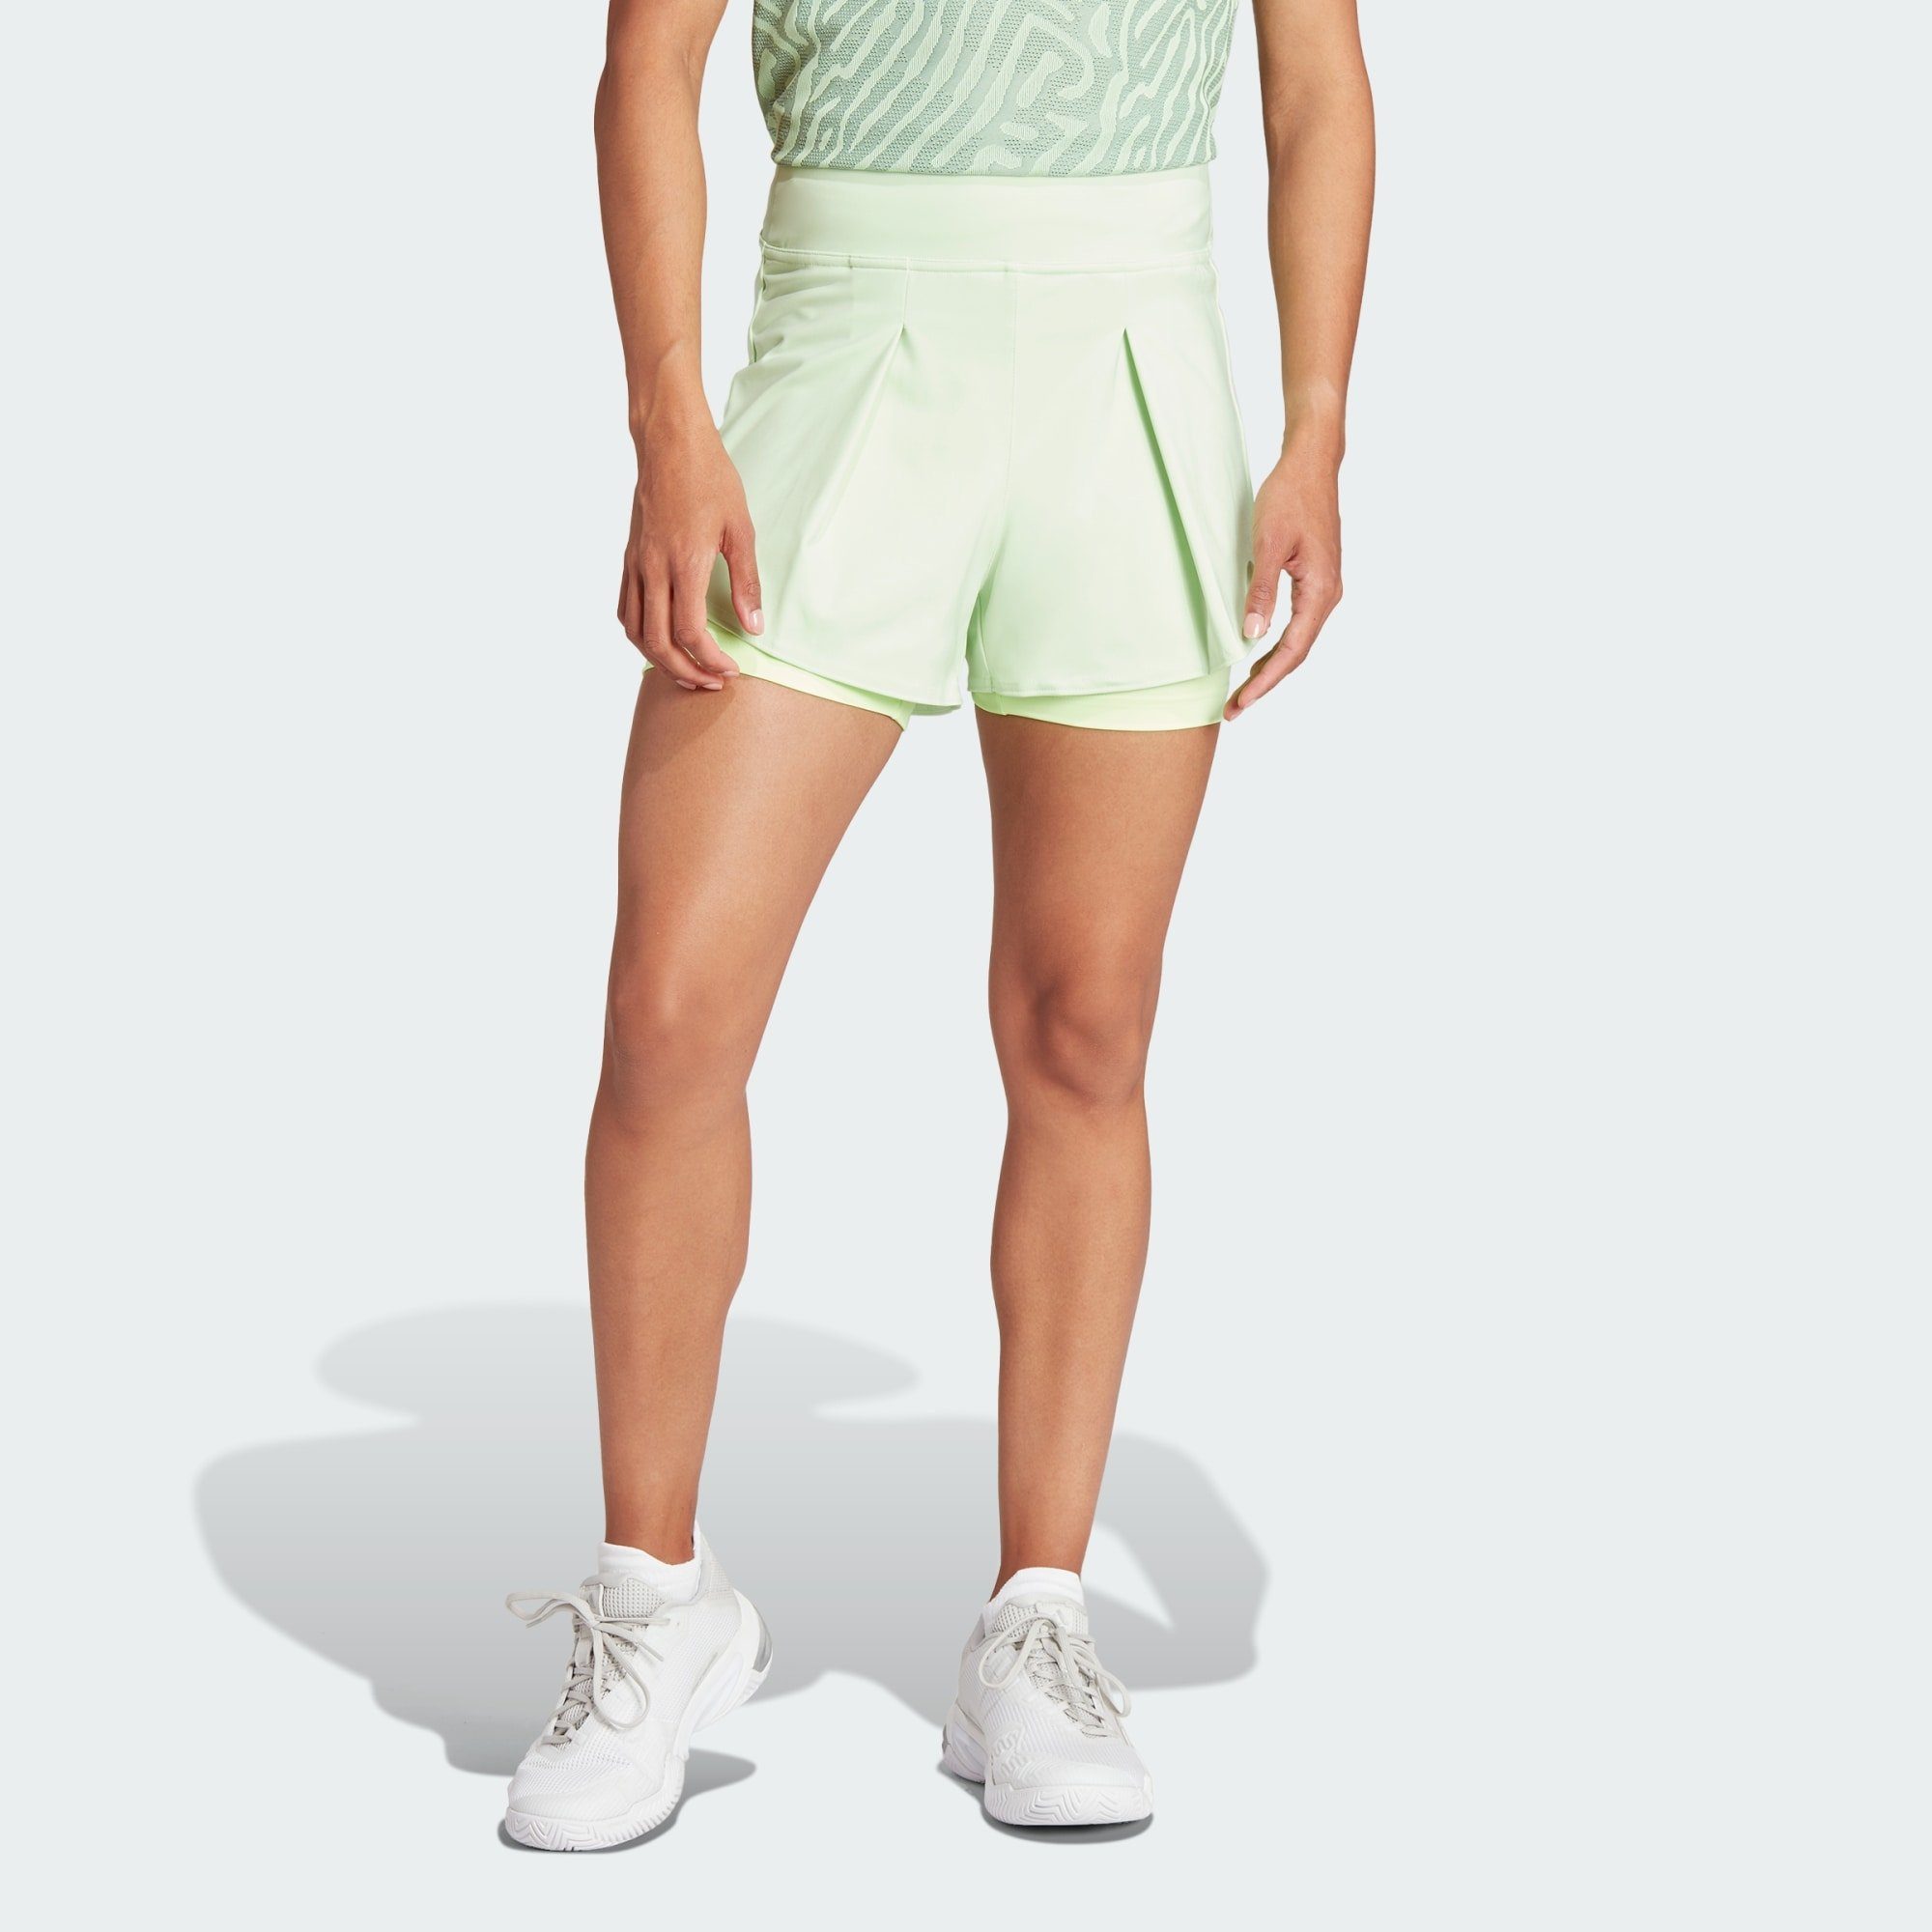 TENNIS Spark Green Green MATCH / adidas 2-in-1-Shorts SHORTS Semi Spark Performance